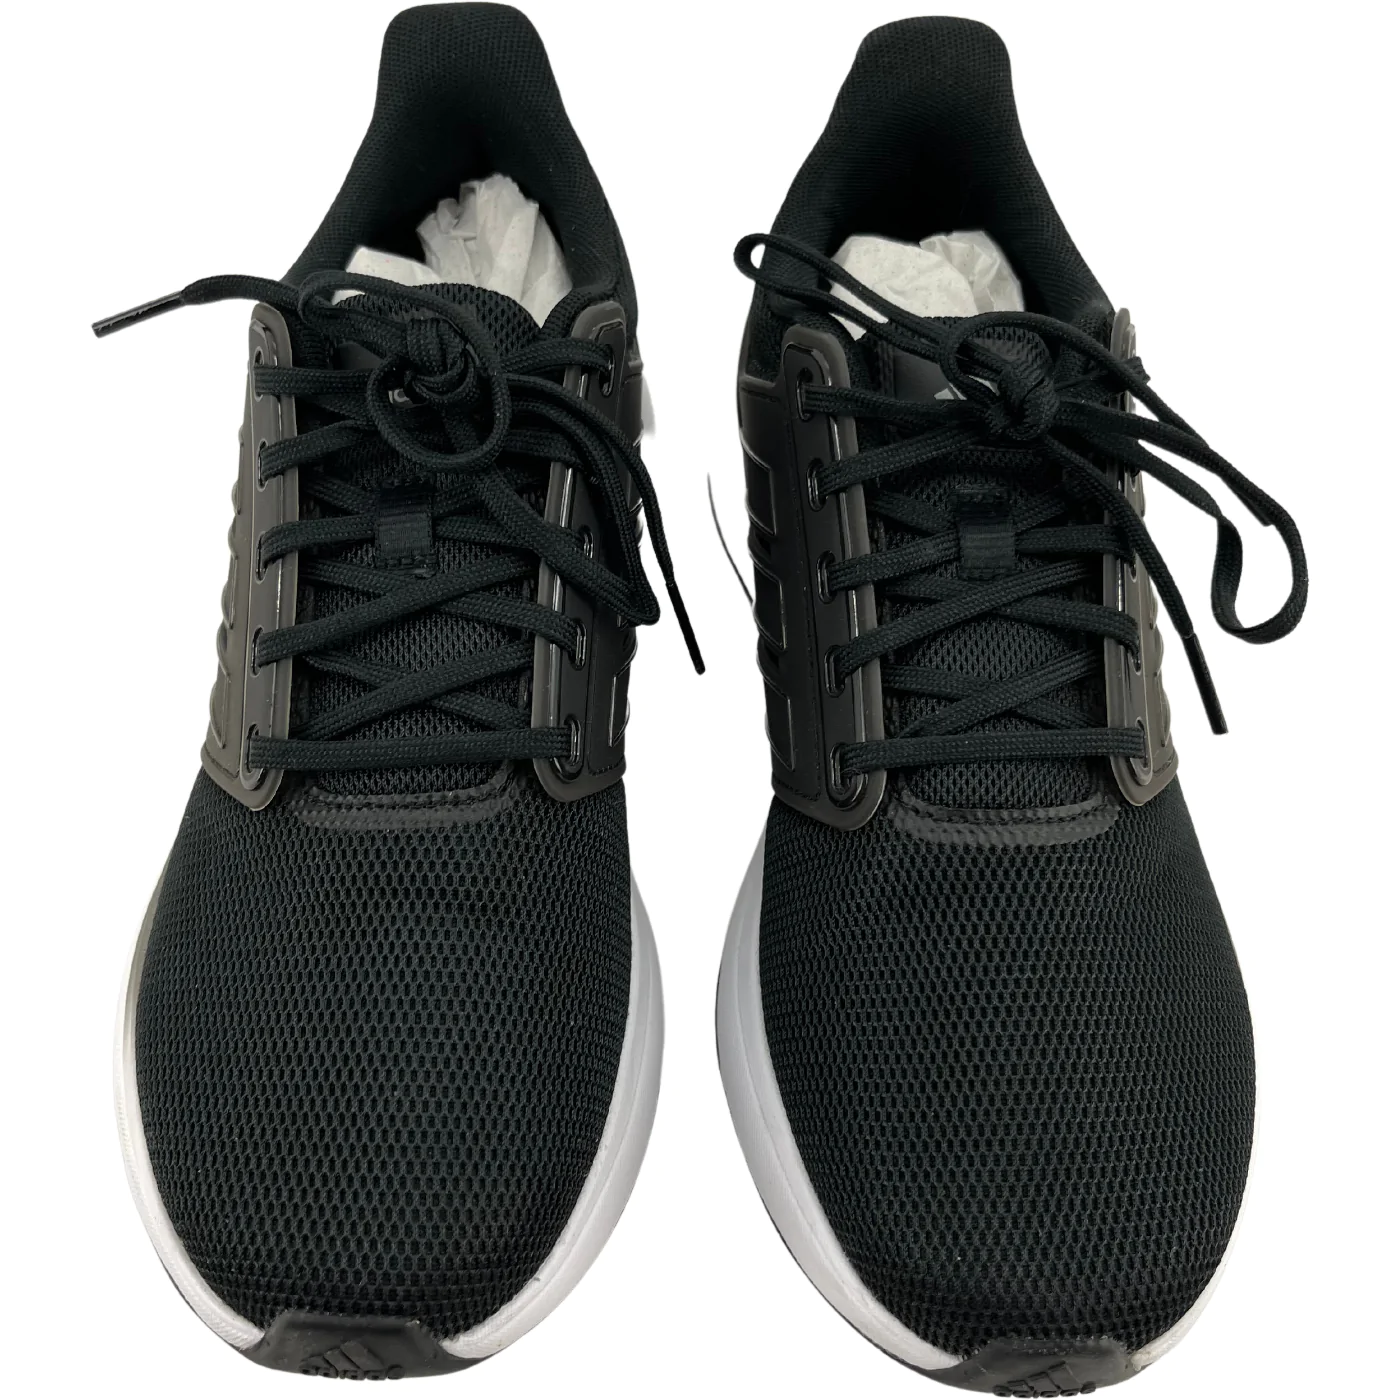 Adidas Men's Running Shoes / EQ19 Run / Black & Grey / Size 8 **NO TAGS**